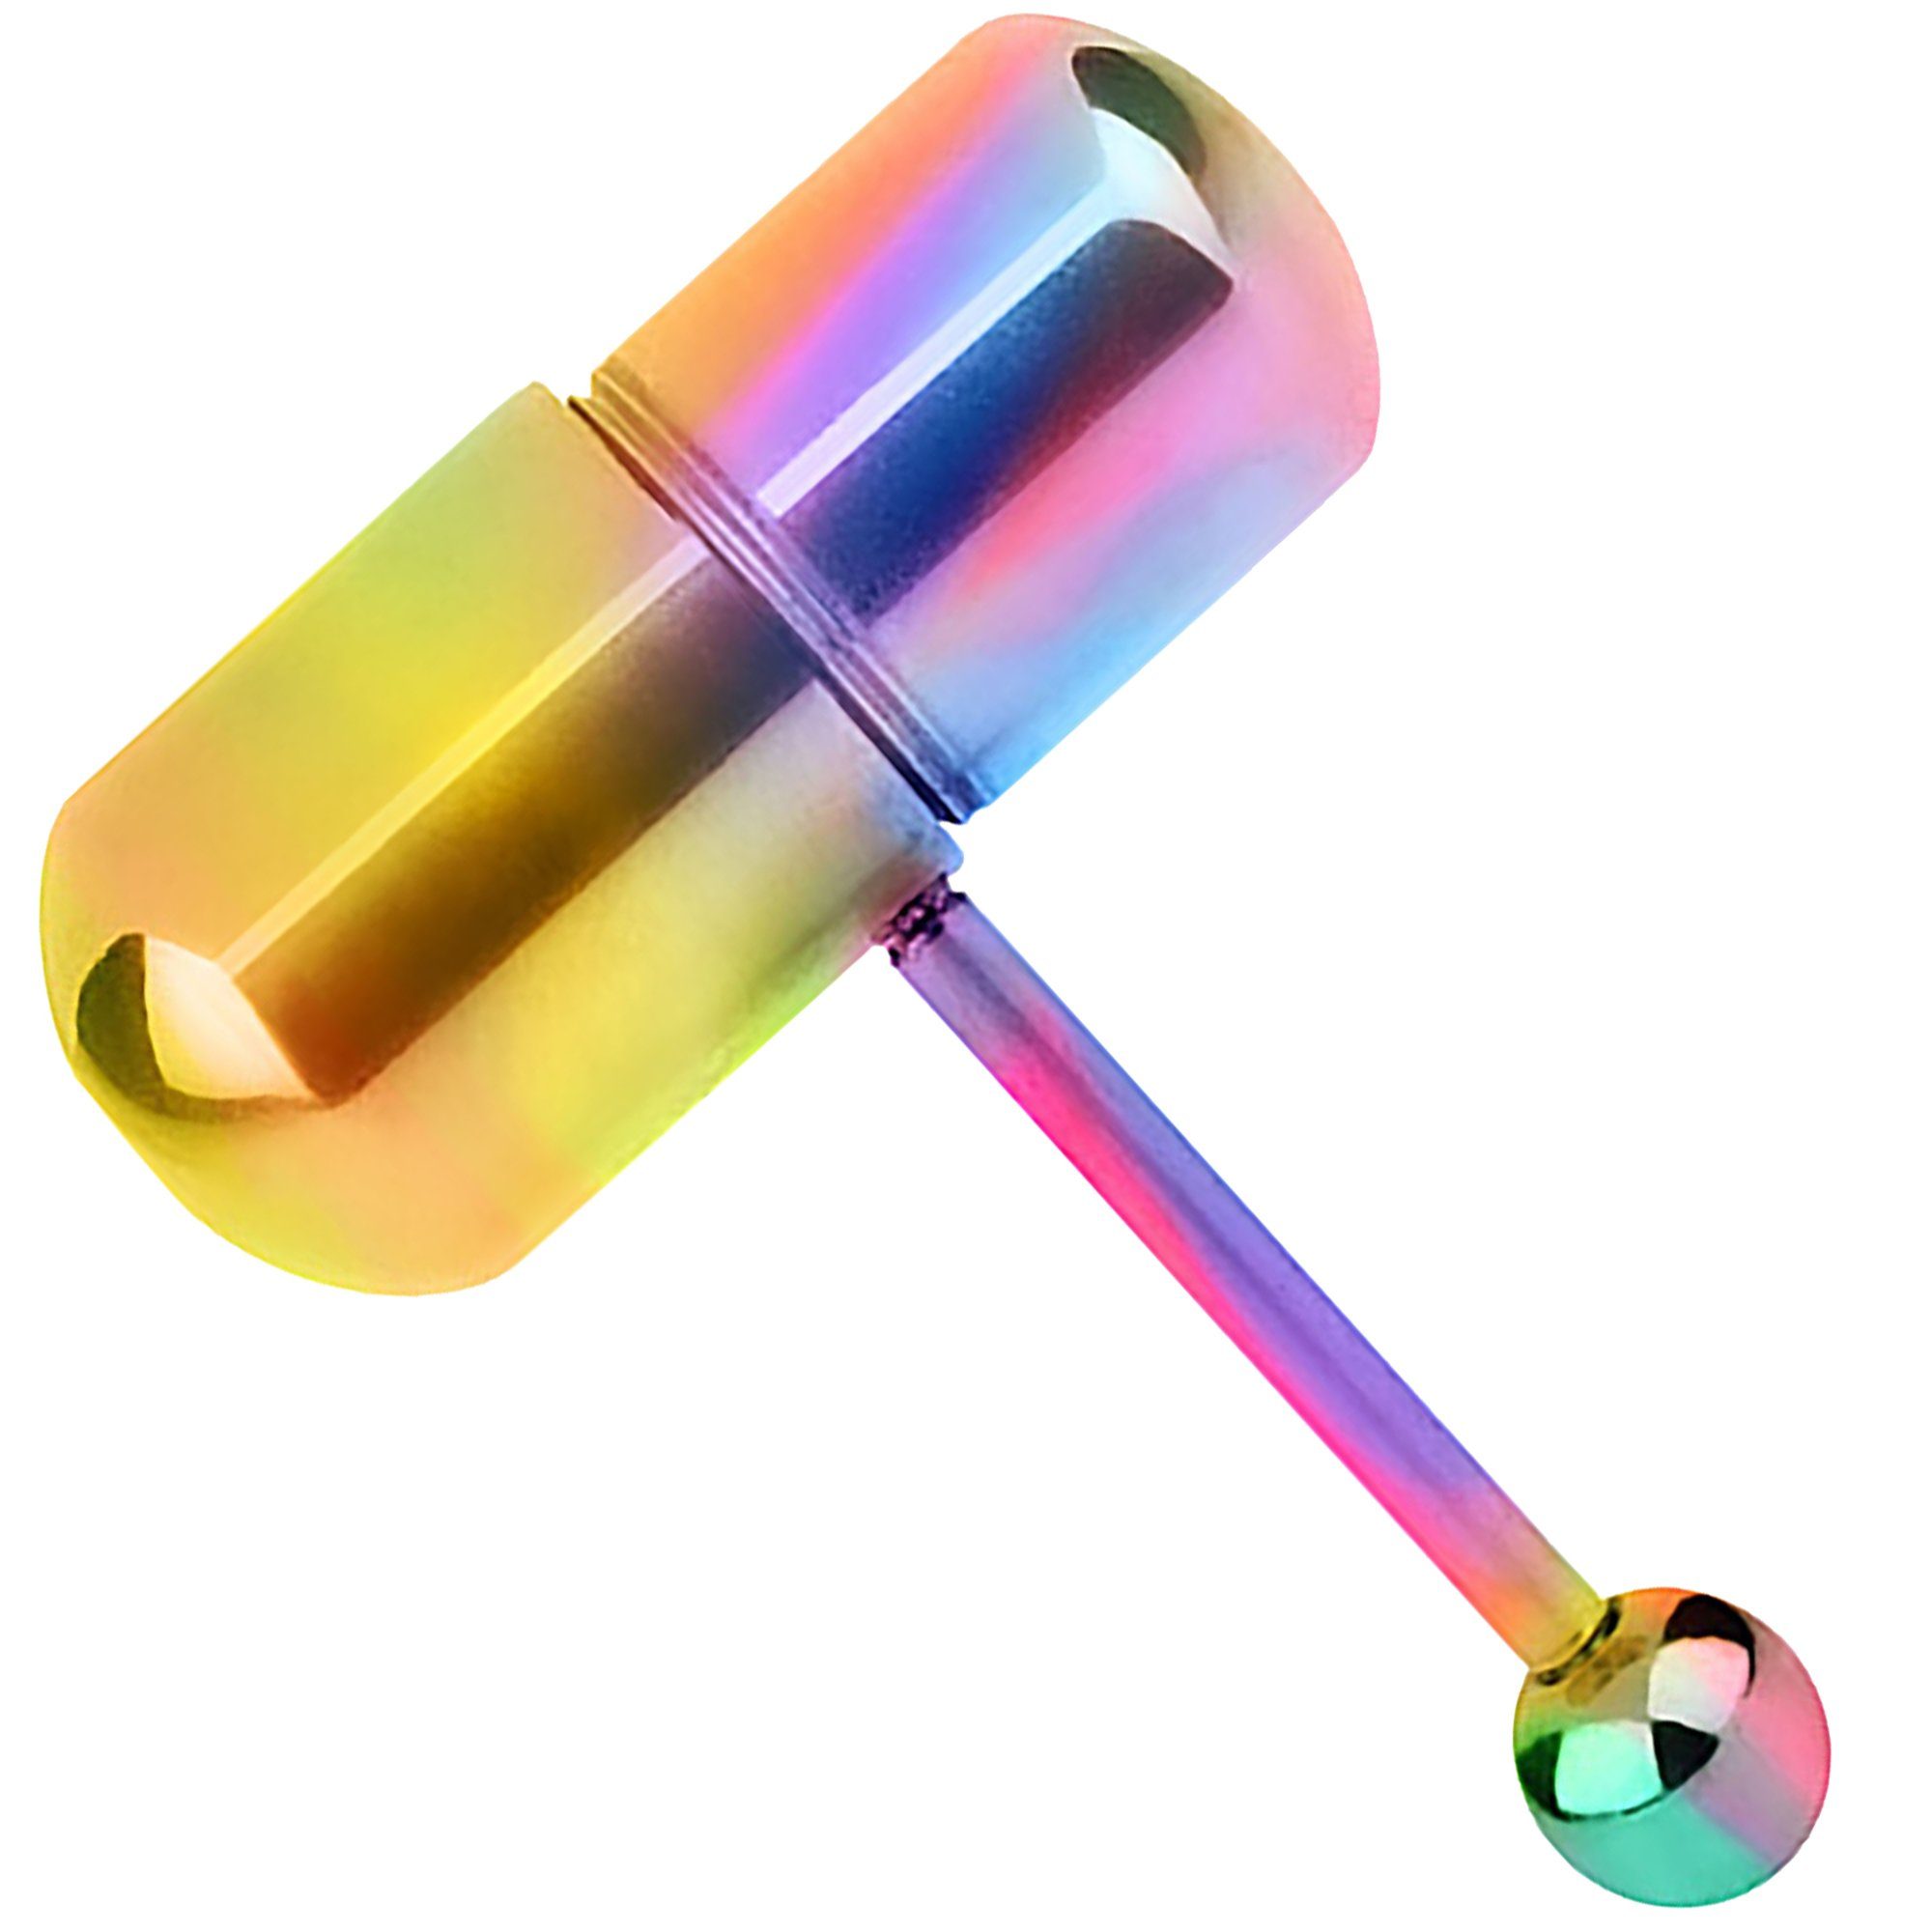 Kugel Stab Vibrierendes Ohrpiercing Rainbow Stecker Barbell Tragus Oral Fun, Zungenpiercing Hantel Piercing-Set Piercingfaktor Intim Helix Taffstyle